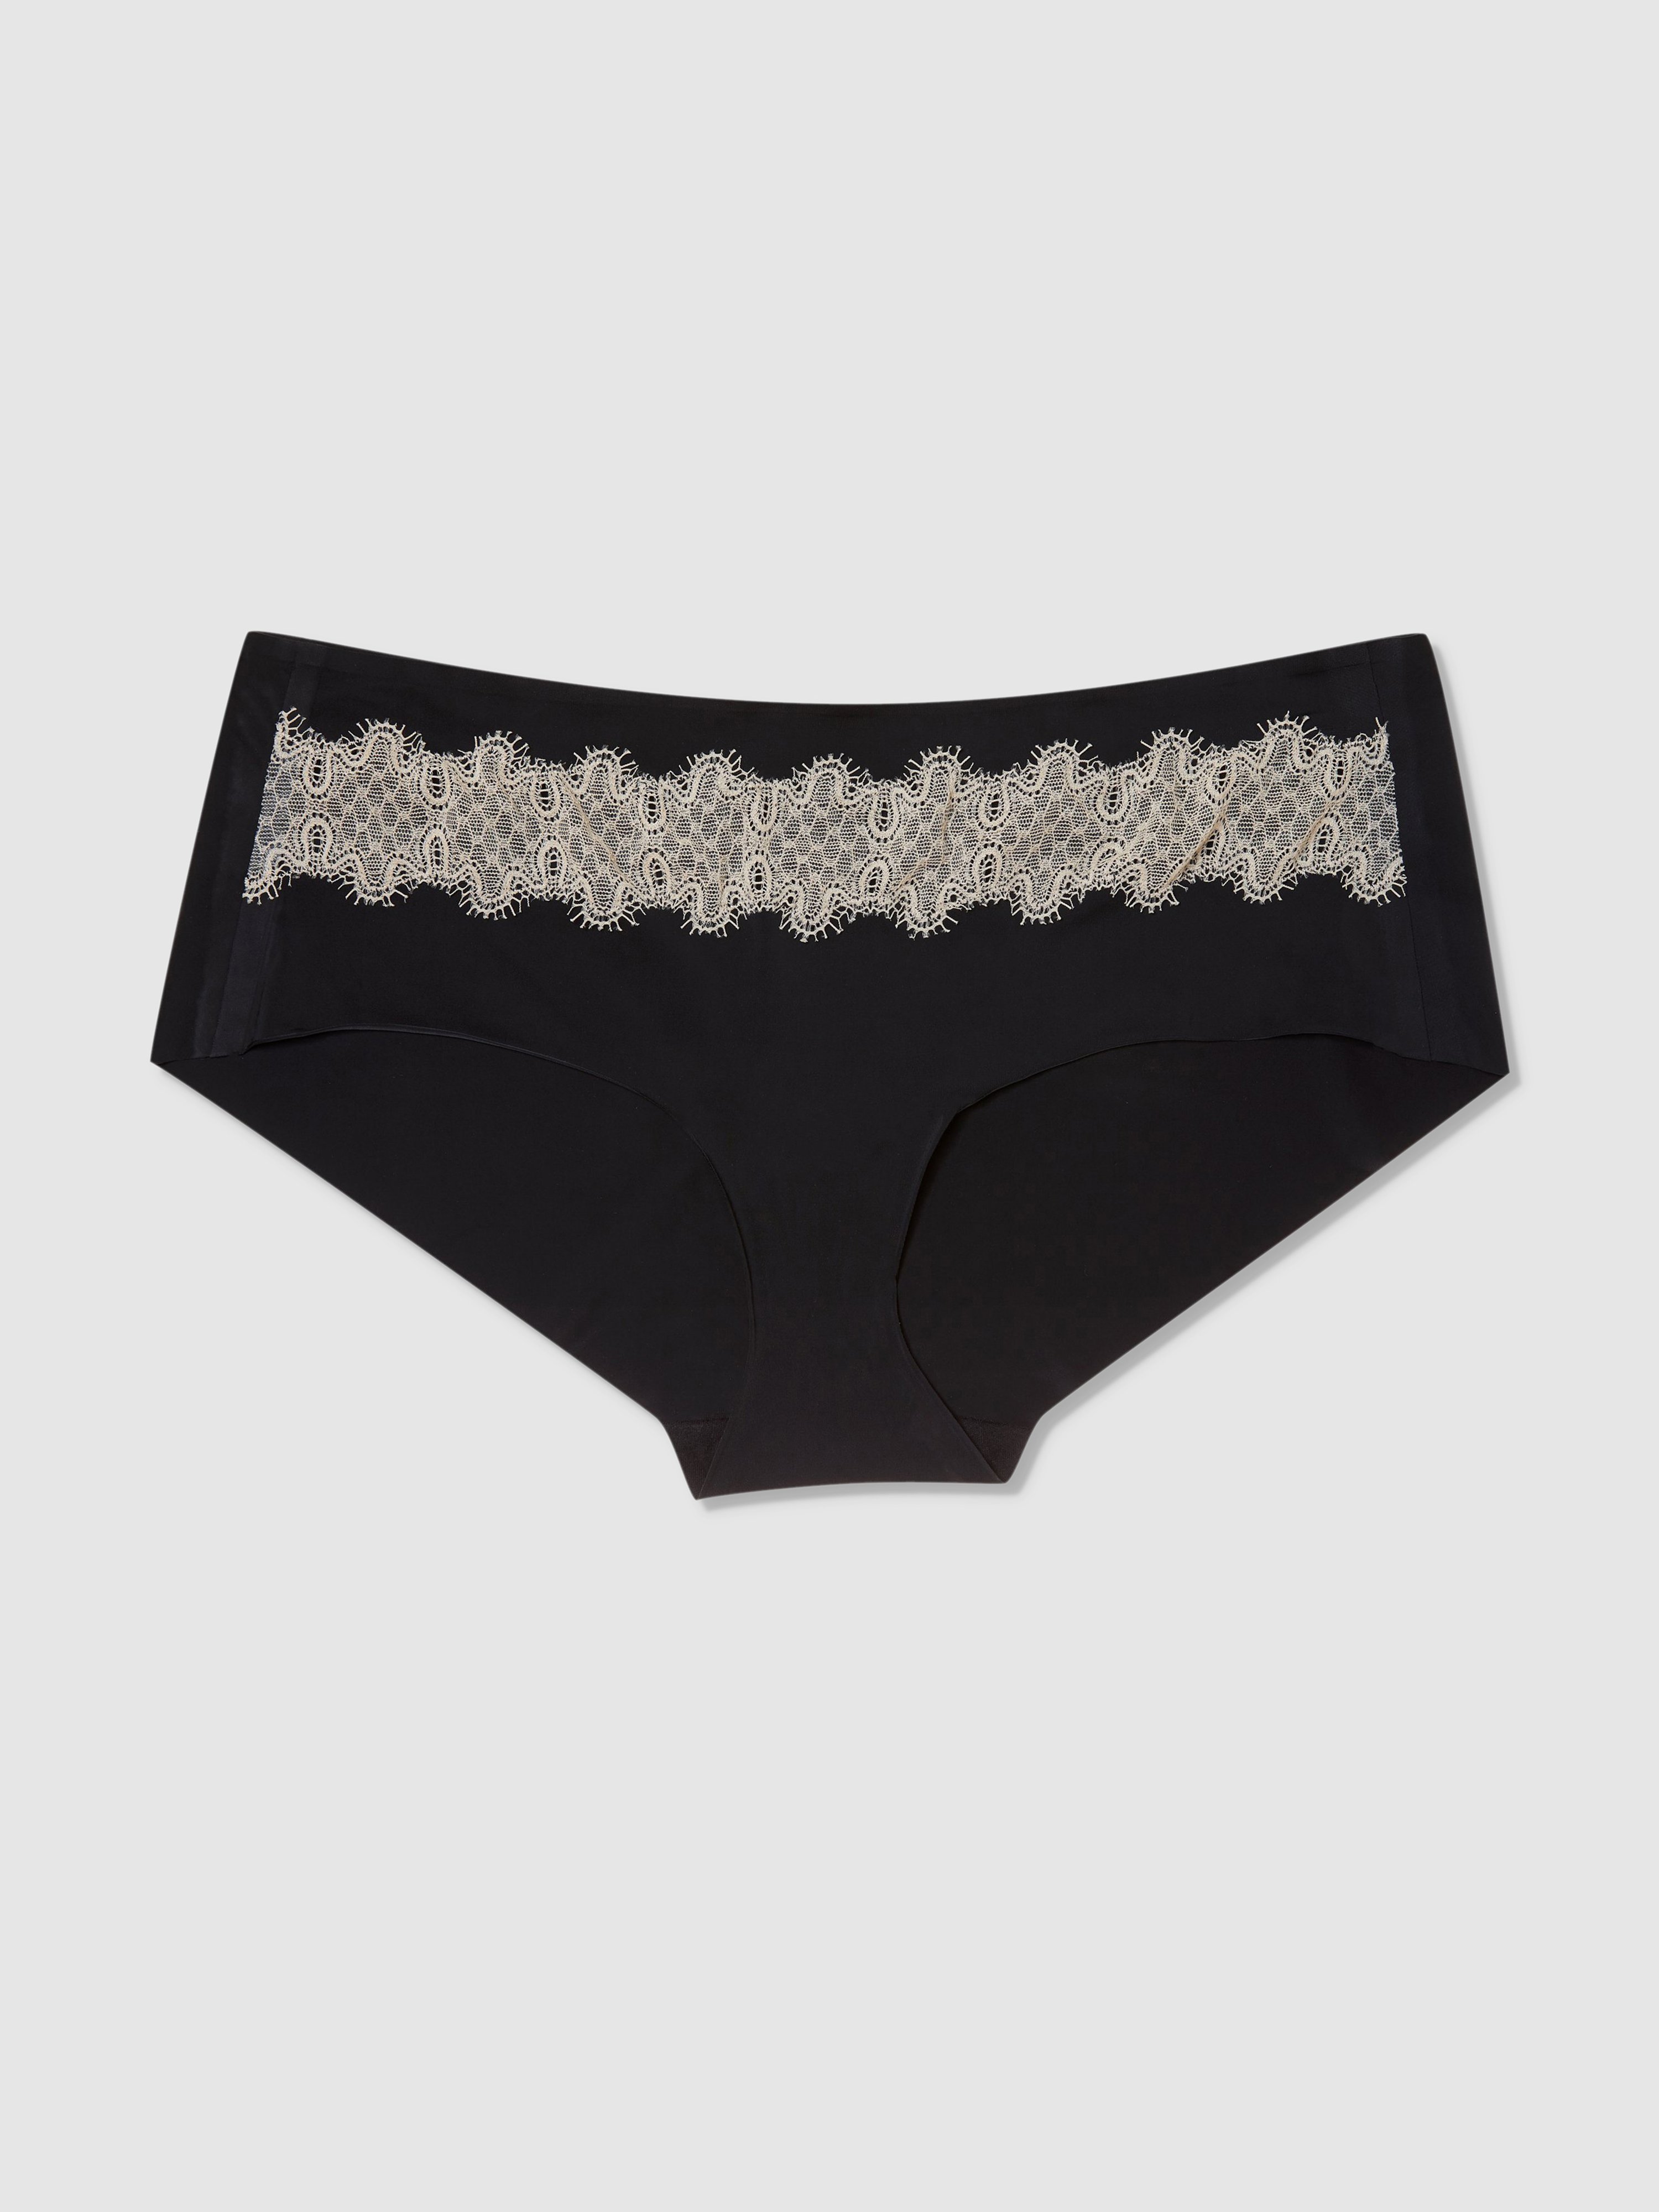 Uwila Warrior Seamless Underwear | Happy Seams With Contrast Lace In Black